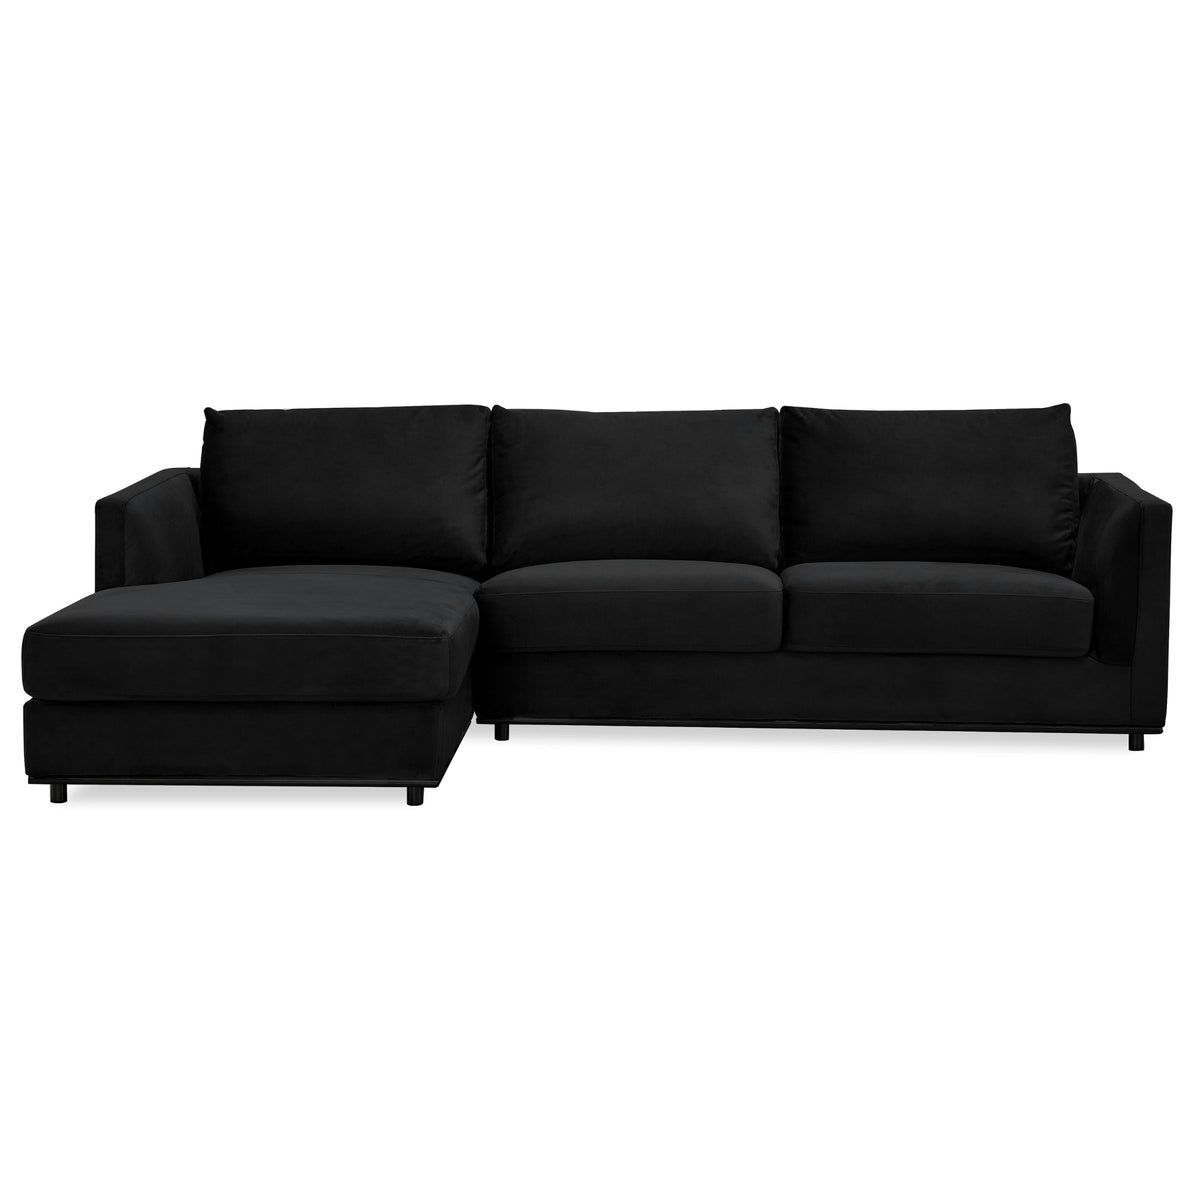 Kennedi 2 Seater Fabric Chaise Sofa Black Left